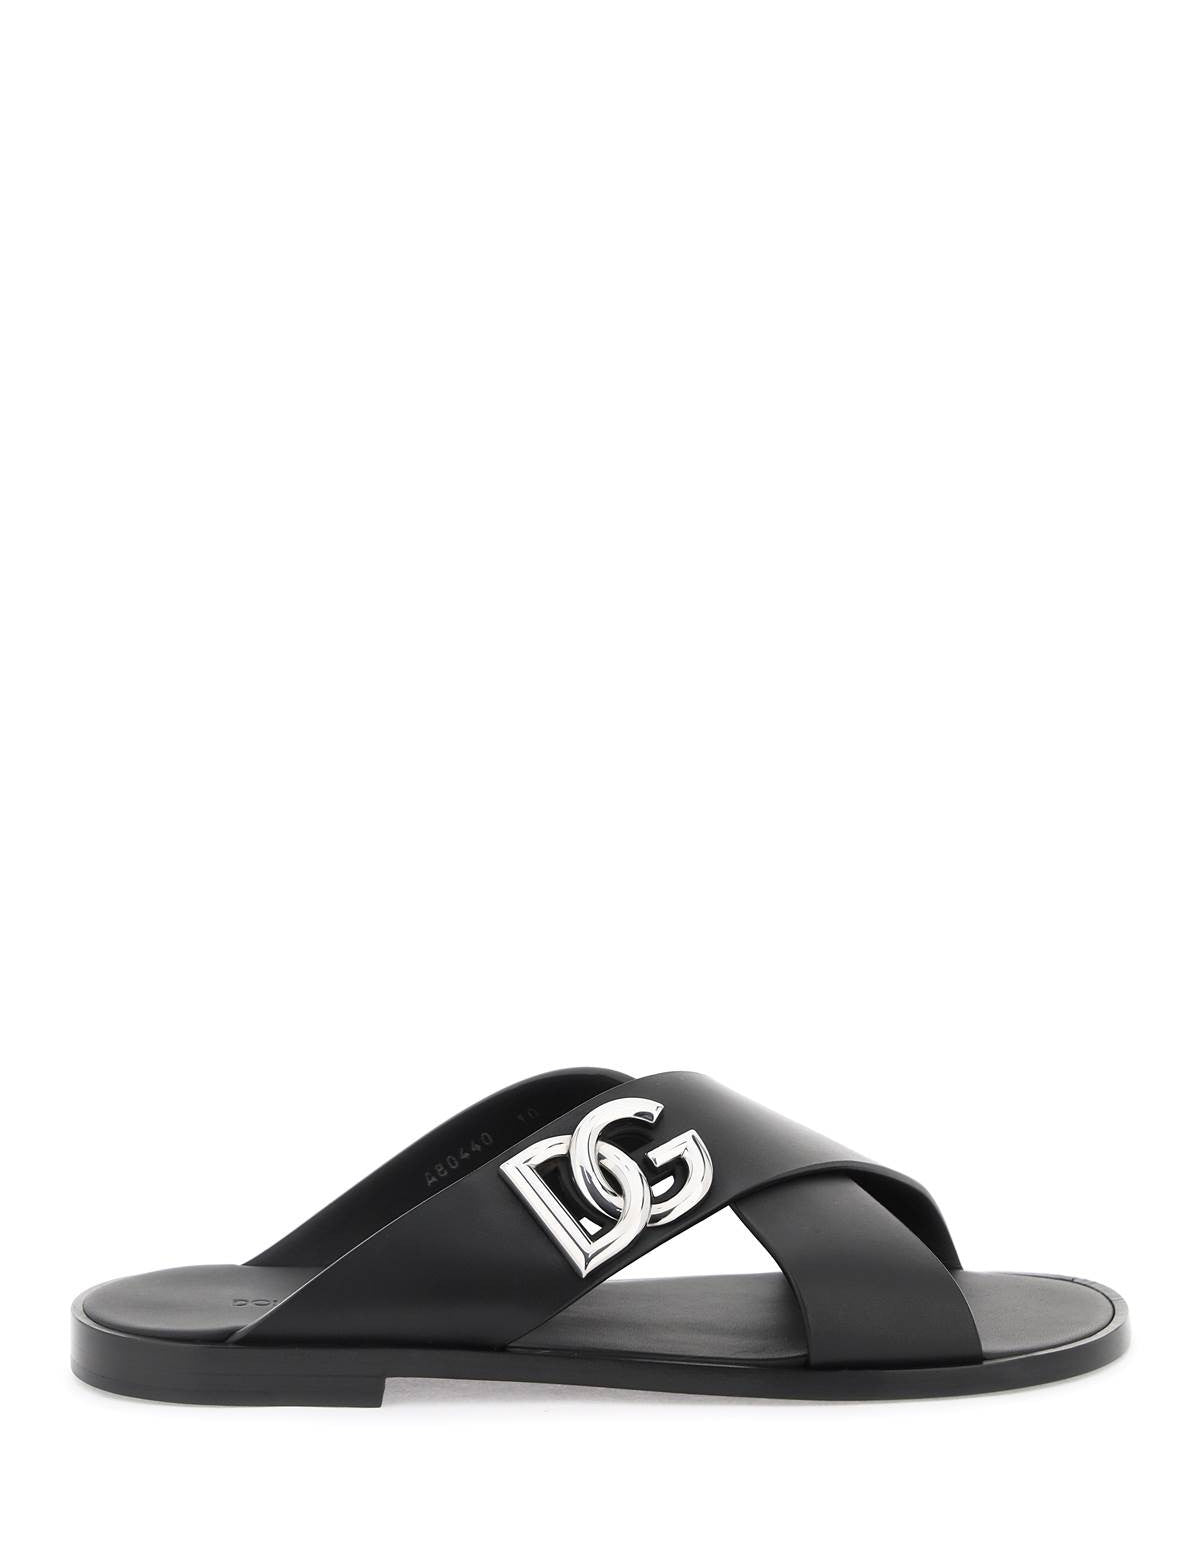 dolce-gabbana-leather-sandals-with-dg-logo.jpg